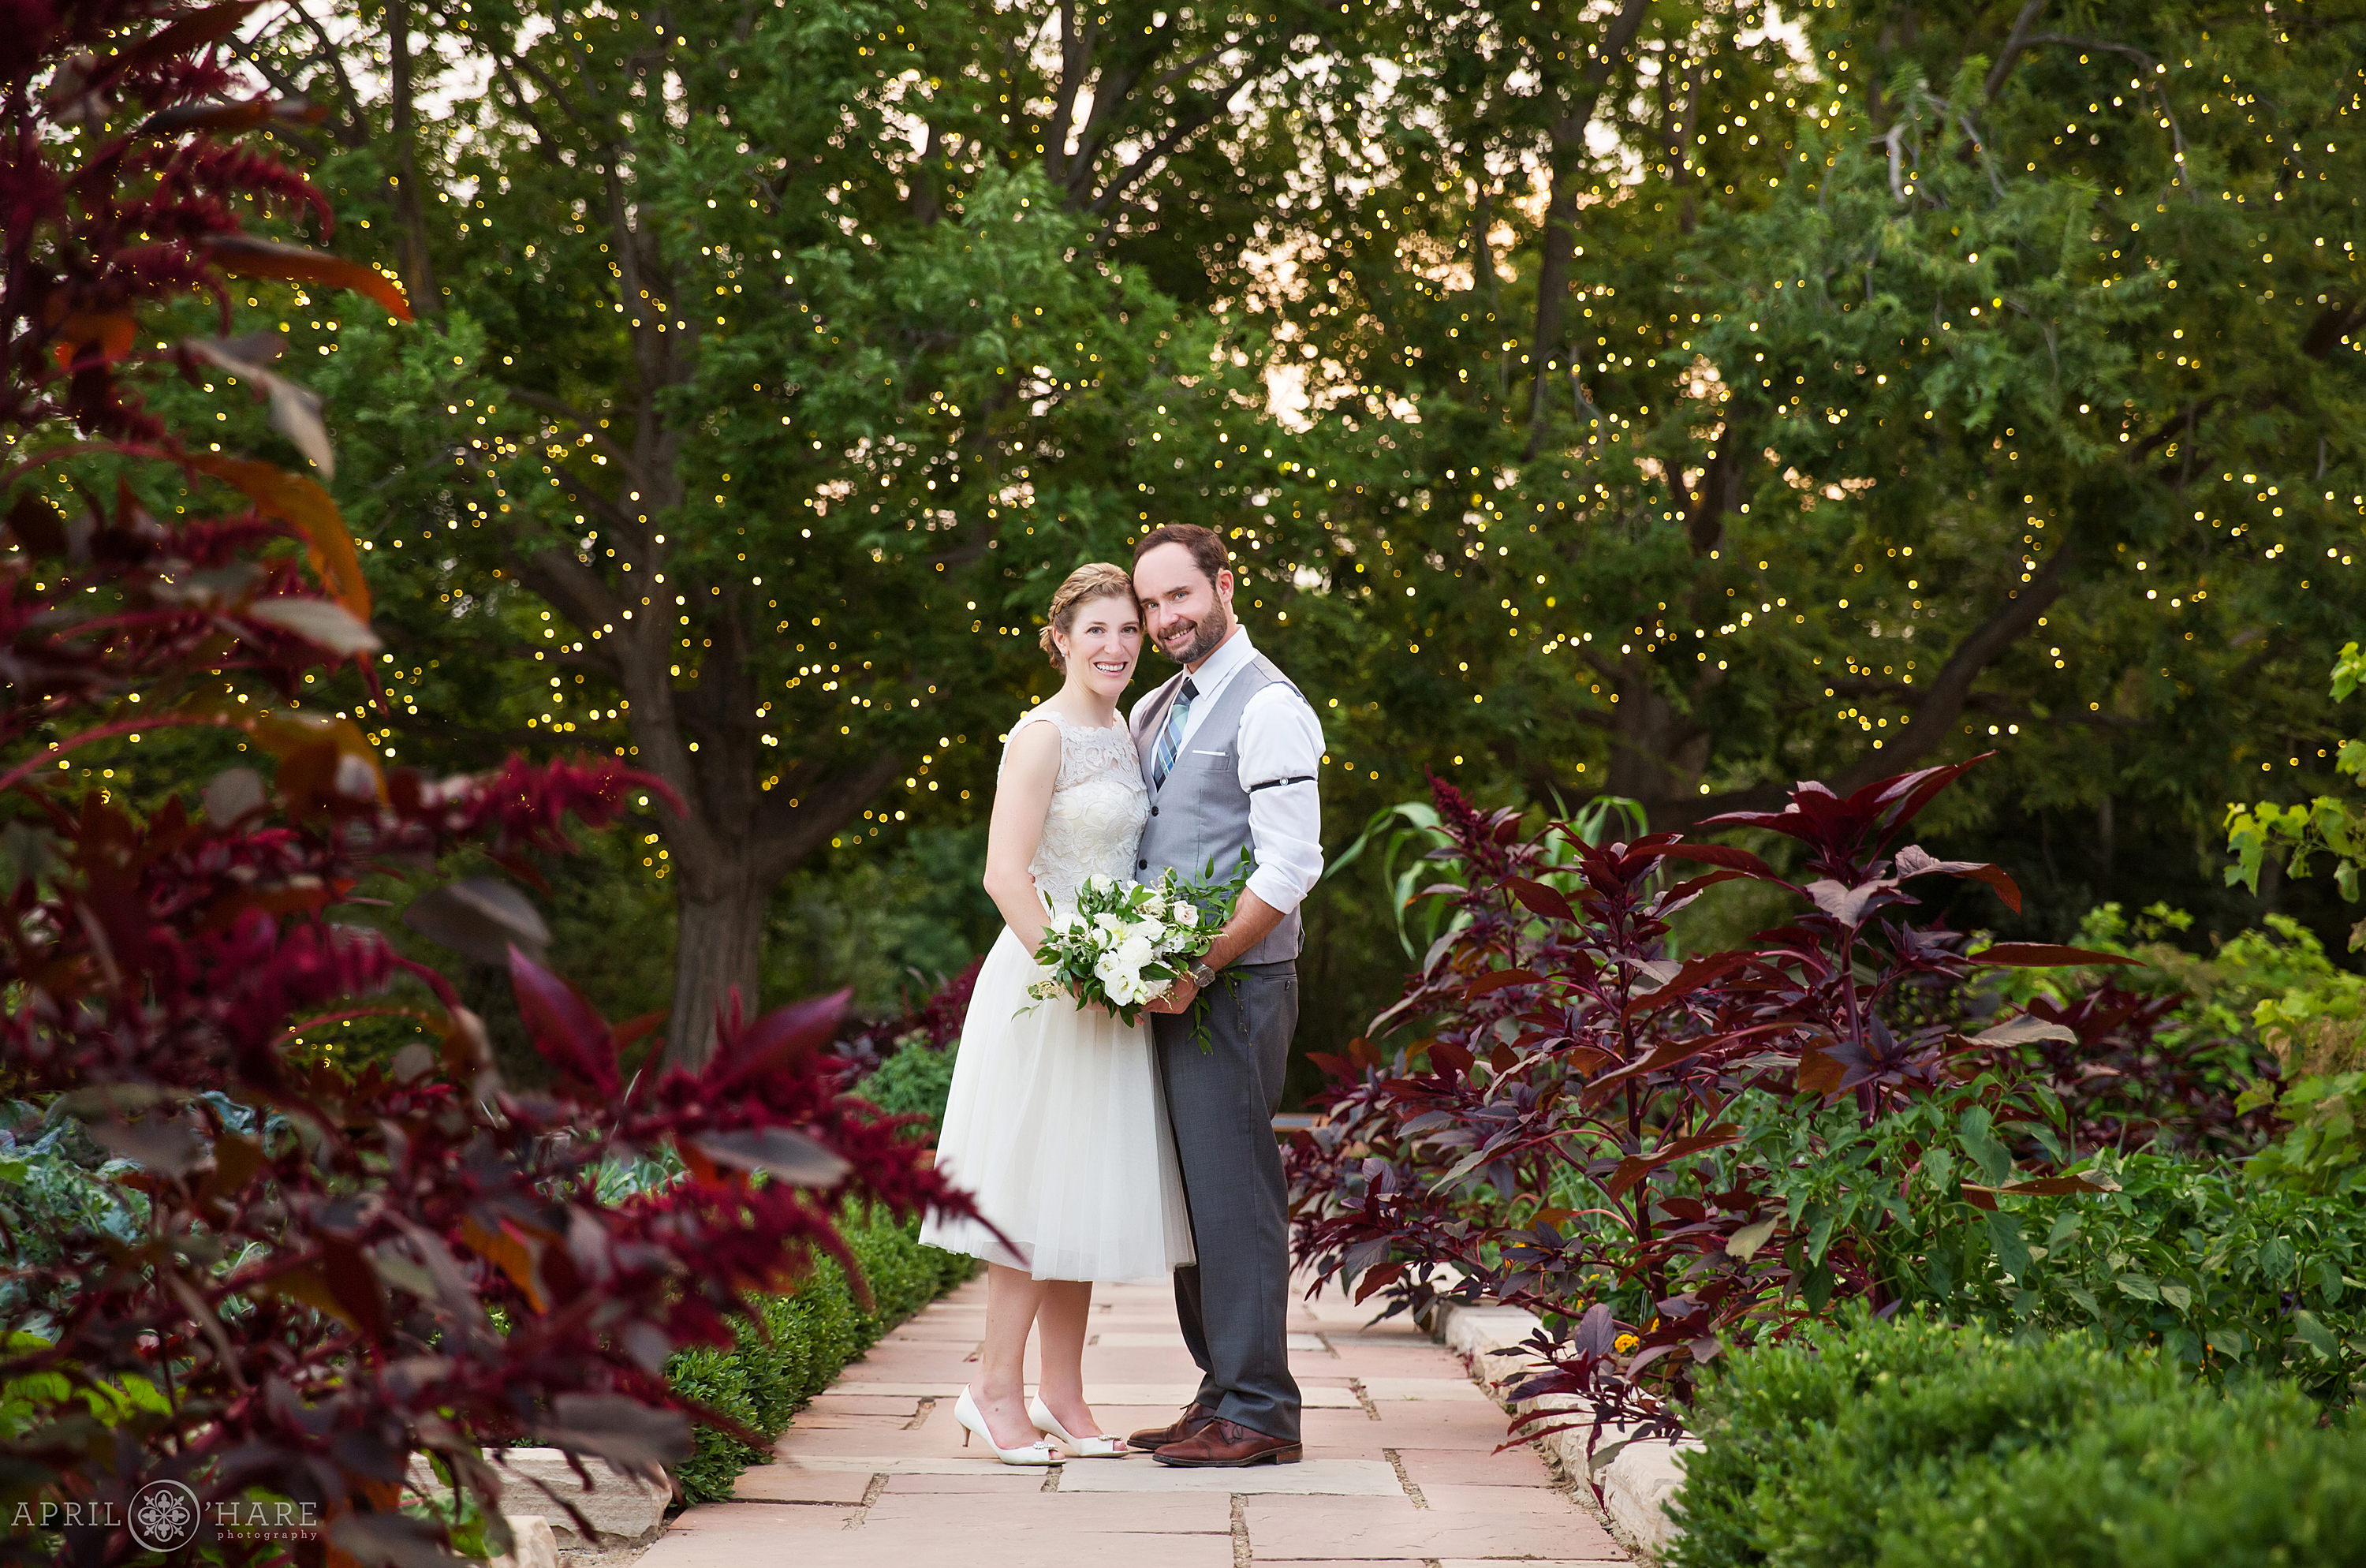 Denver Botanic Gardens Romantic Wedding Photography under Twinkle Lights